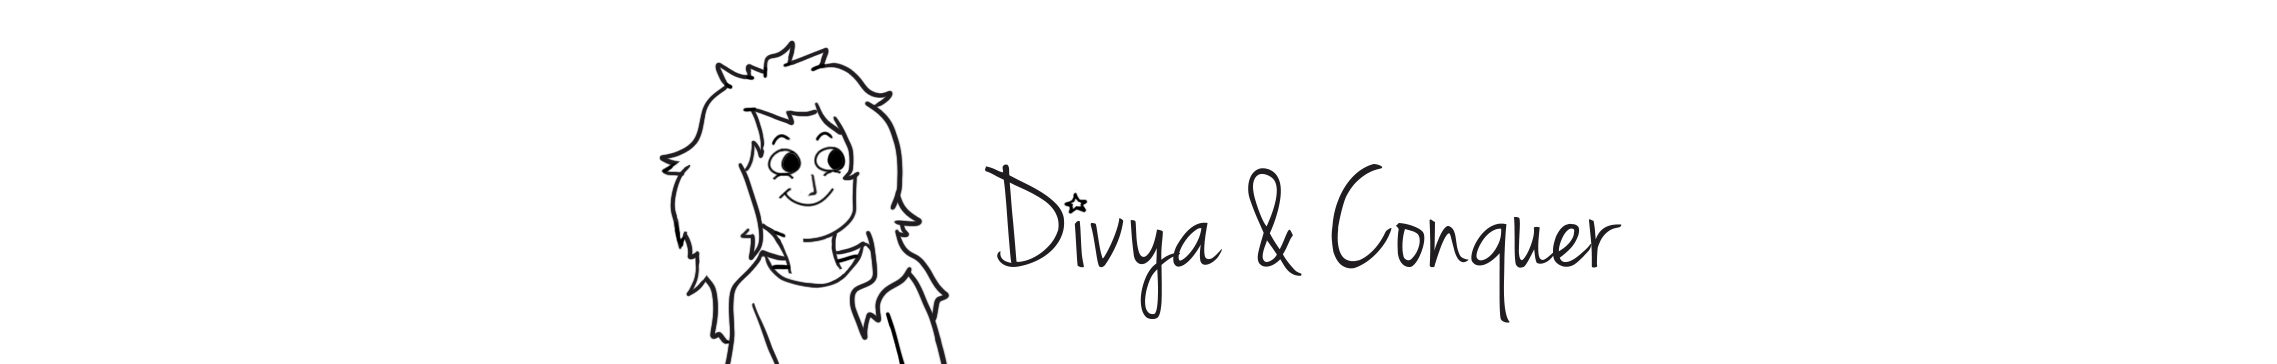 Divya & Conquer